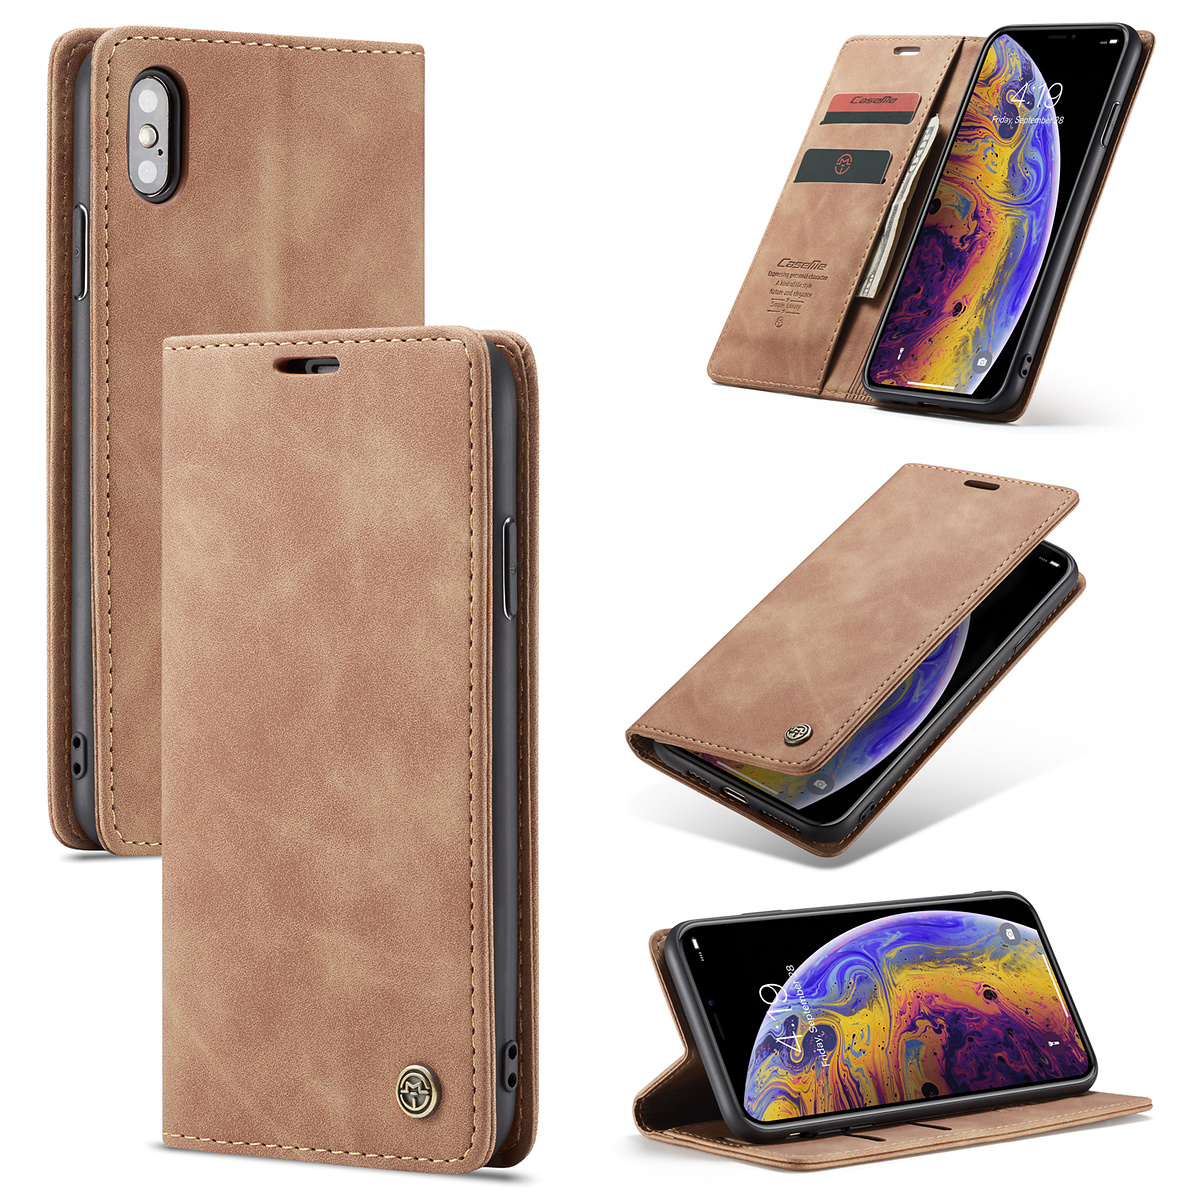 CaseMe plånboksfodral, iPhone X/XS, brun